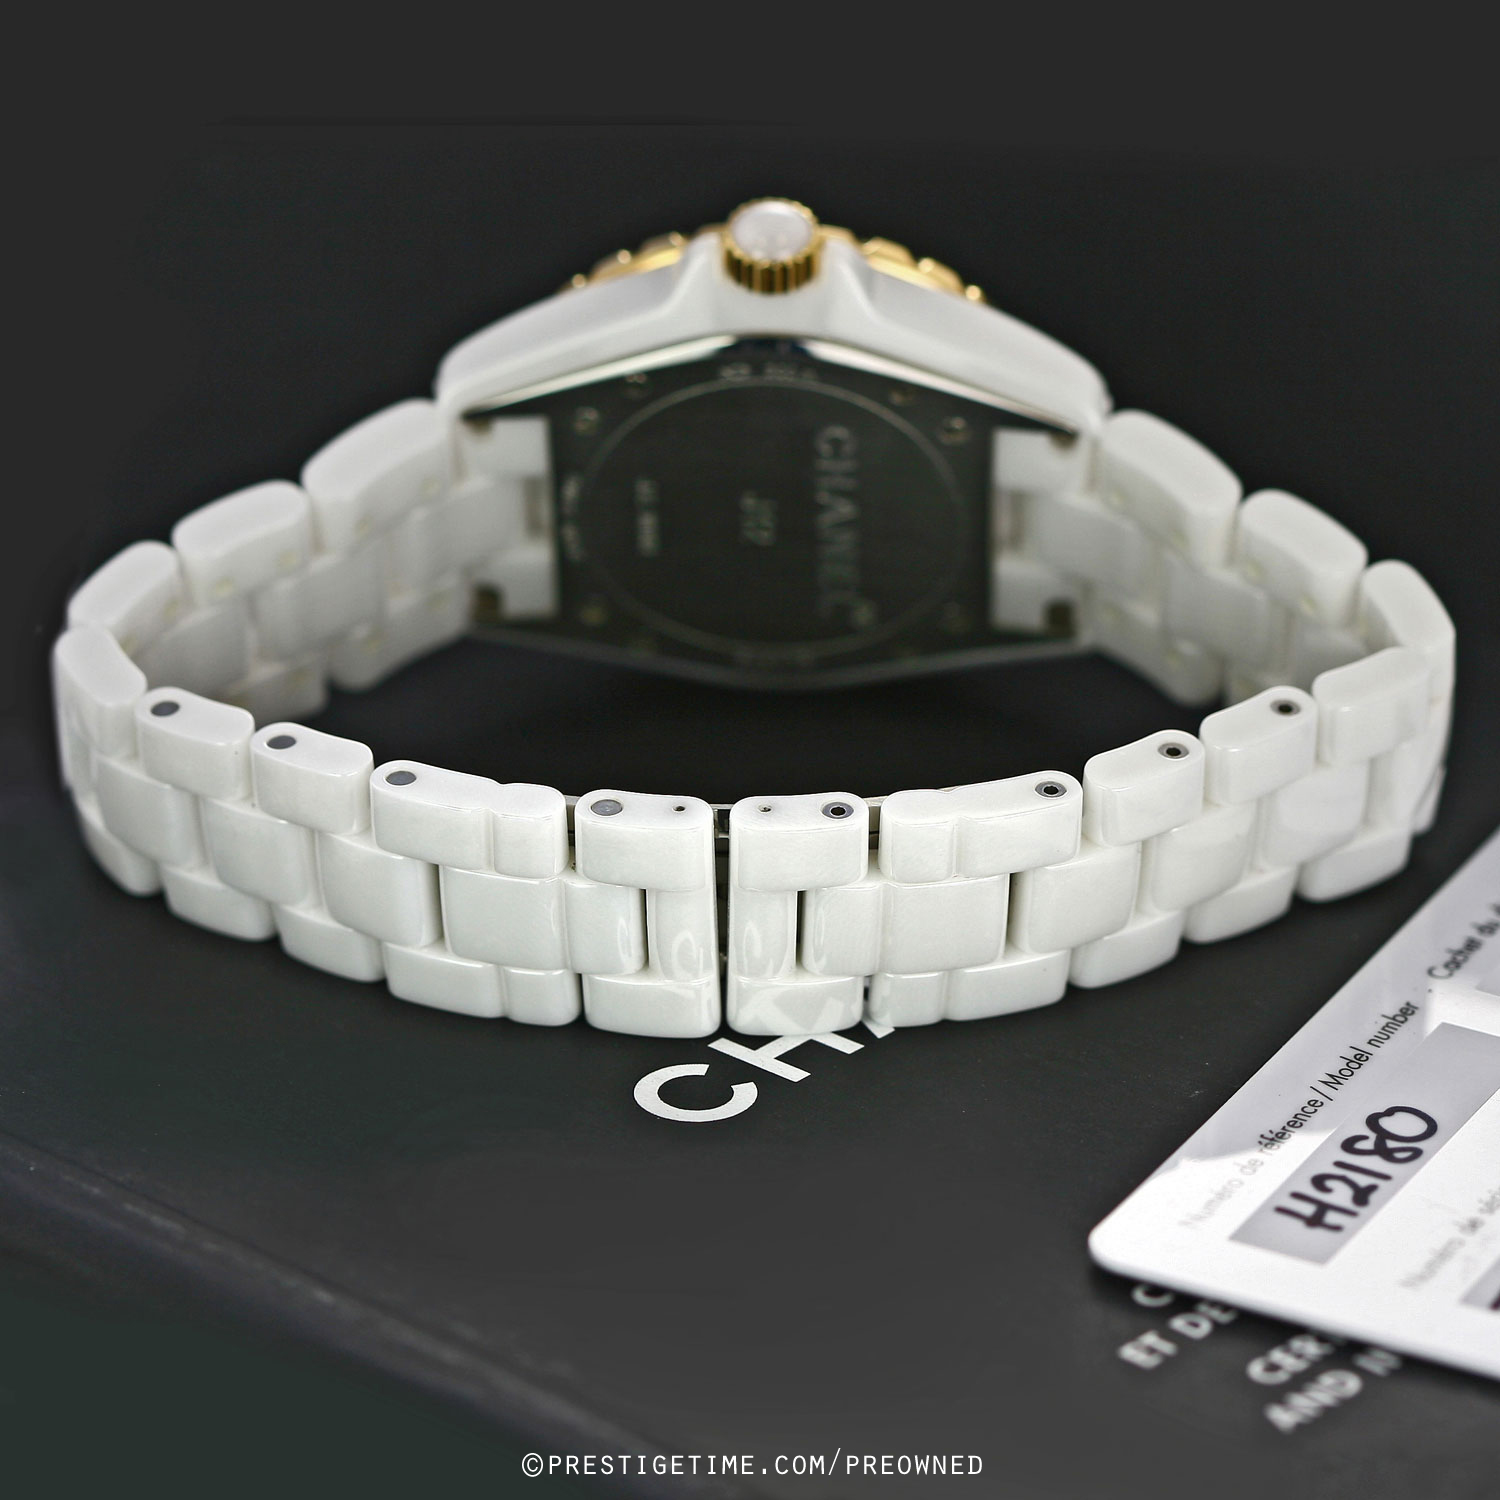 Chanel J12 Ceramic Diamond Lady's Watch - Watch Rapport